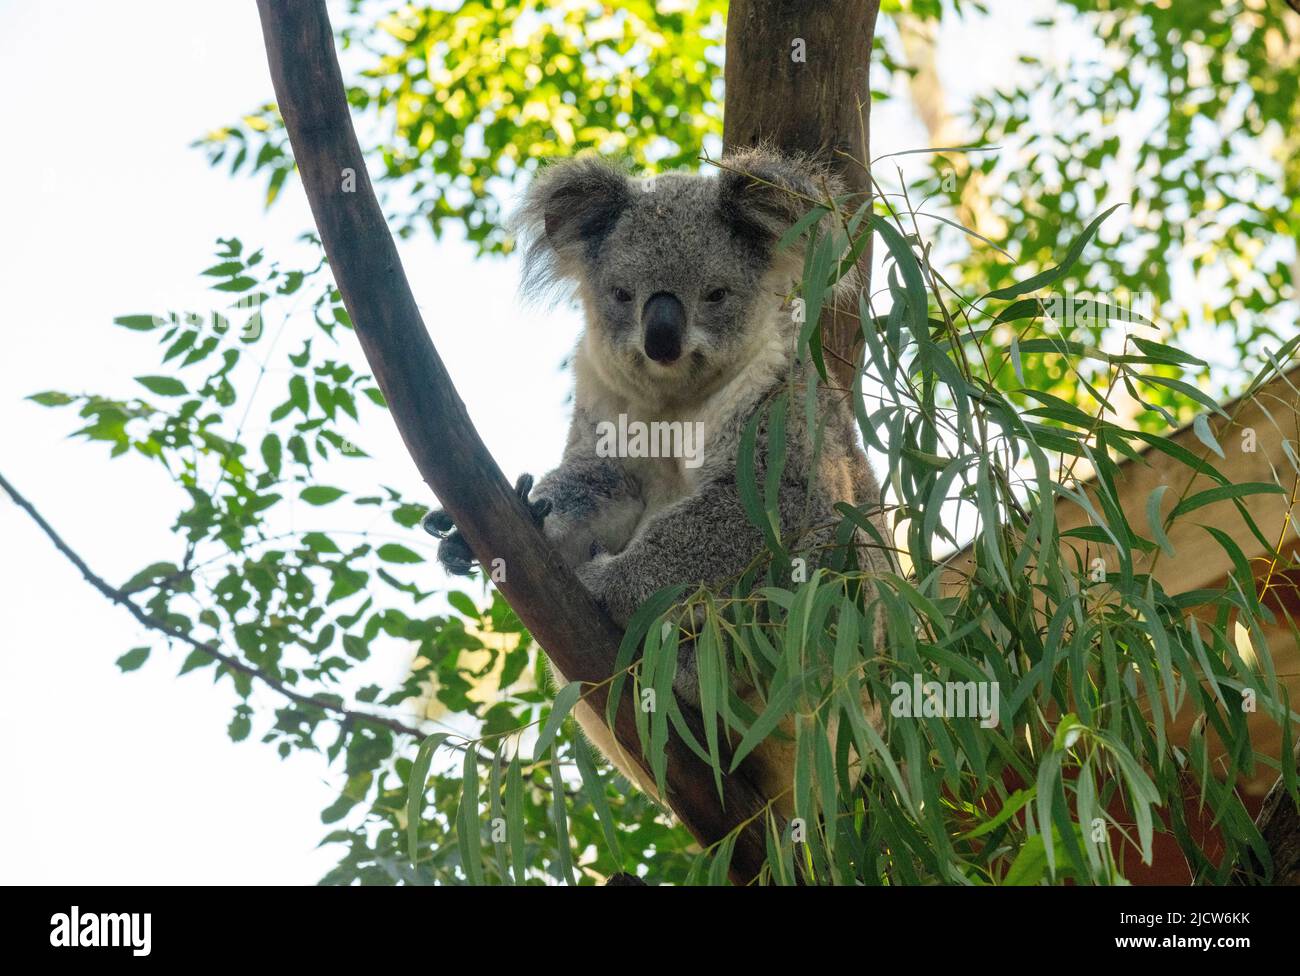 A koala (Phascolarctos cinereus) perched on a tree in Sydney, New South Wales, Australia (Photo by Tara Chand Malhotra) Stock Photo